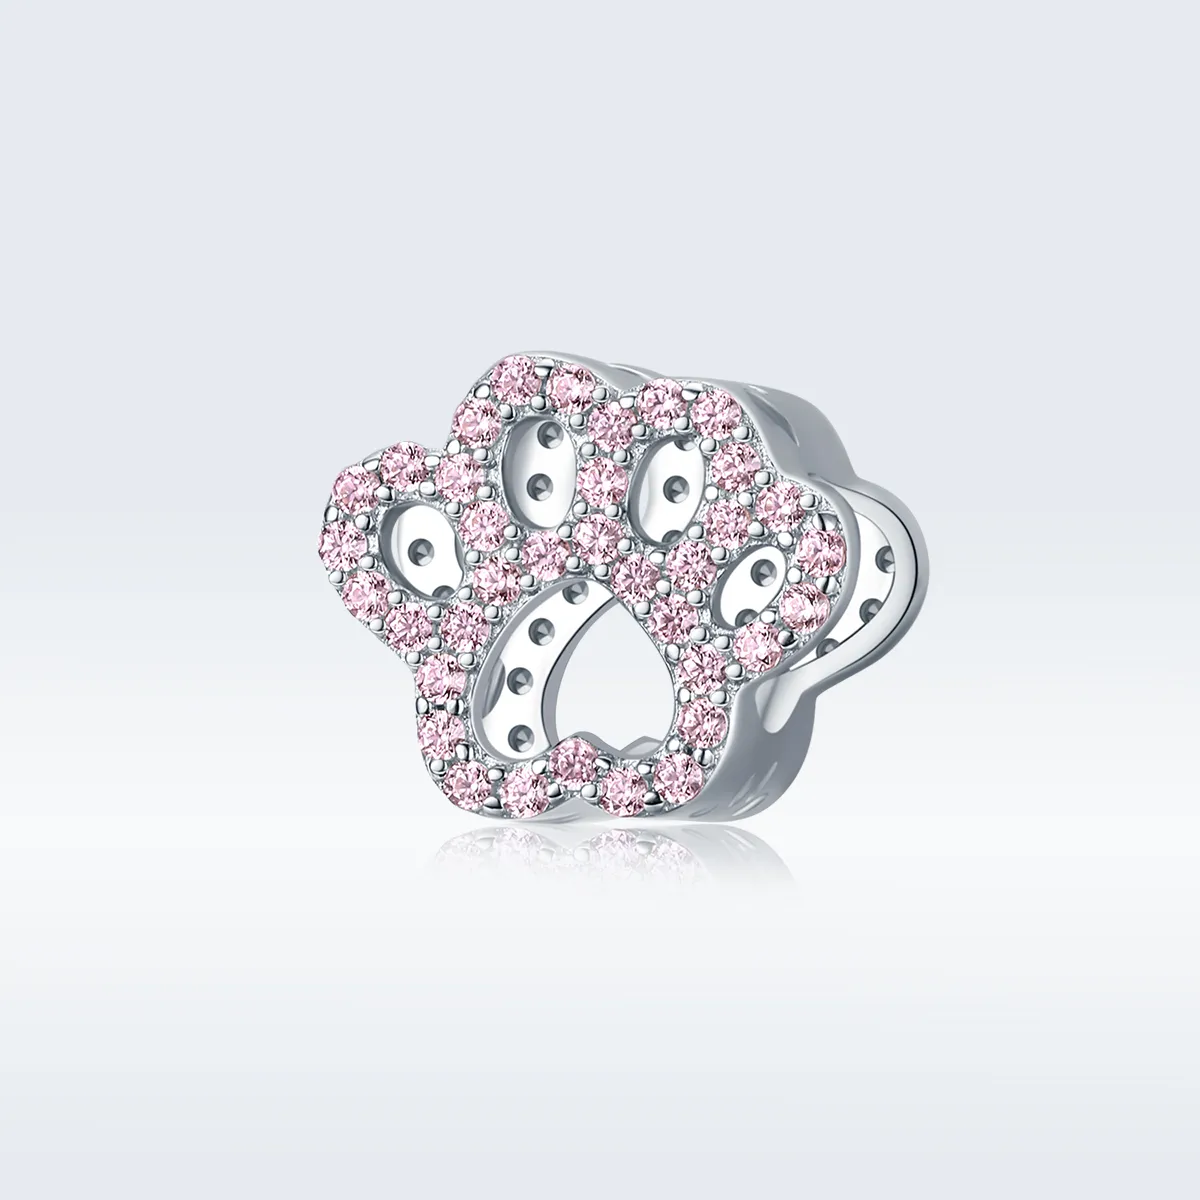 Pandora Style Silver Pink Paw Charm - BSC164